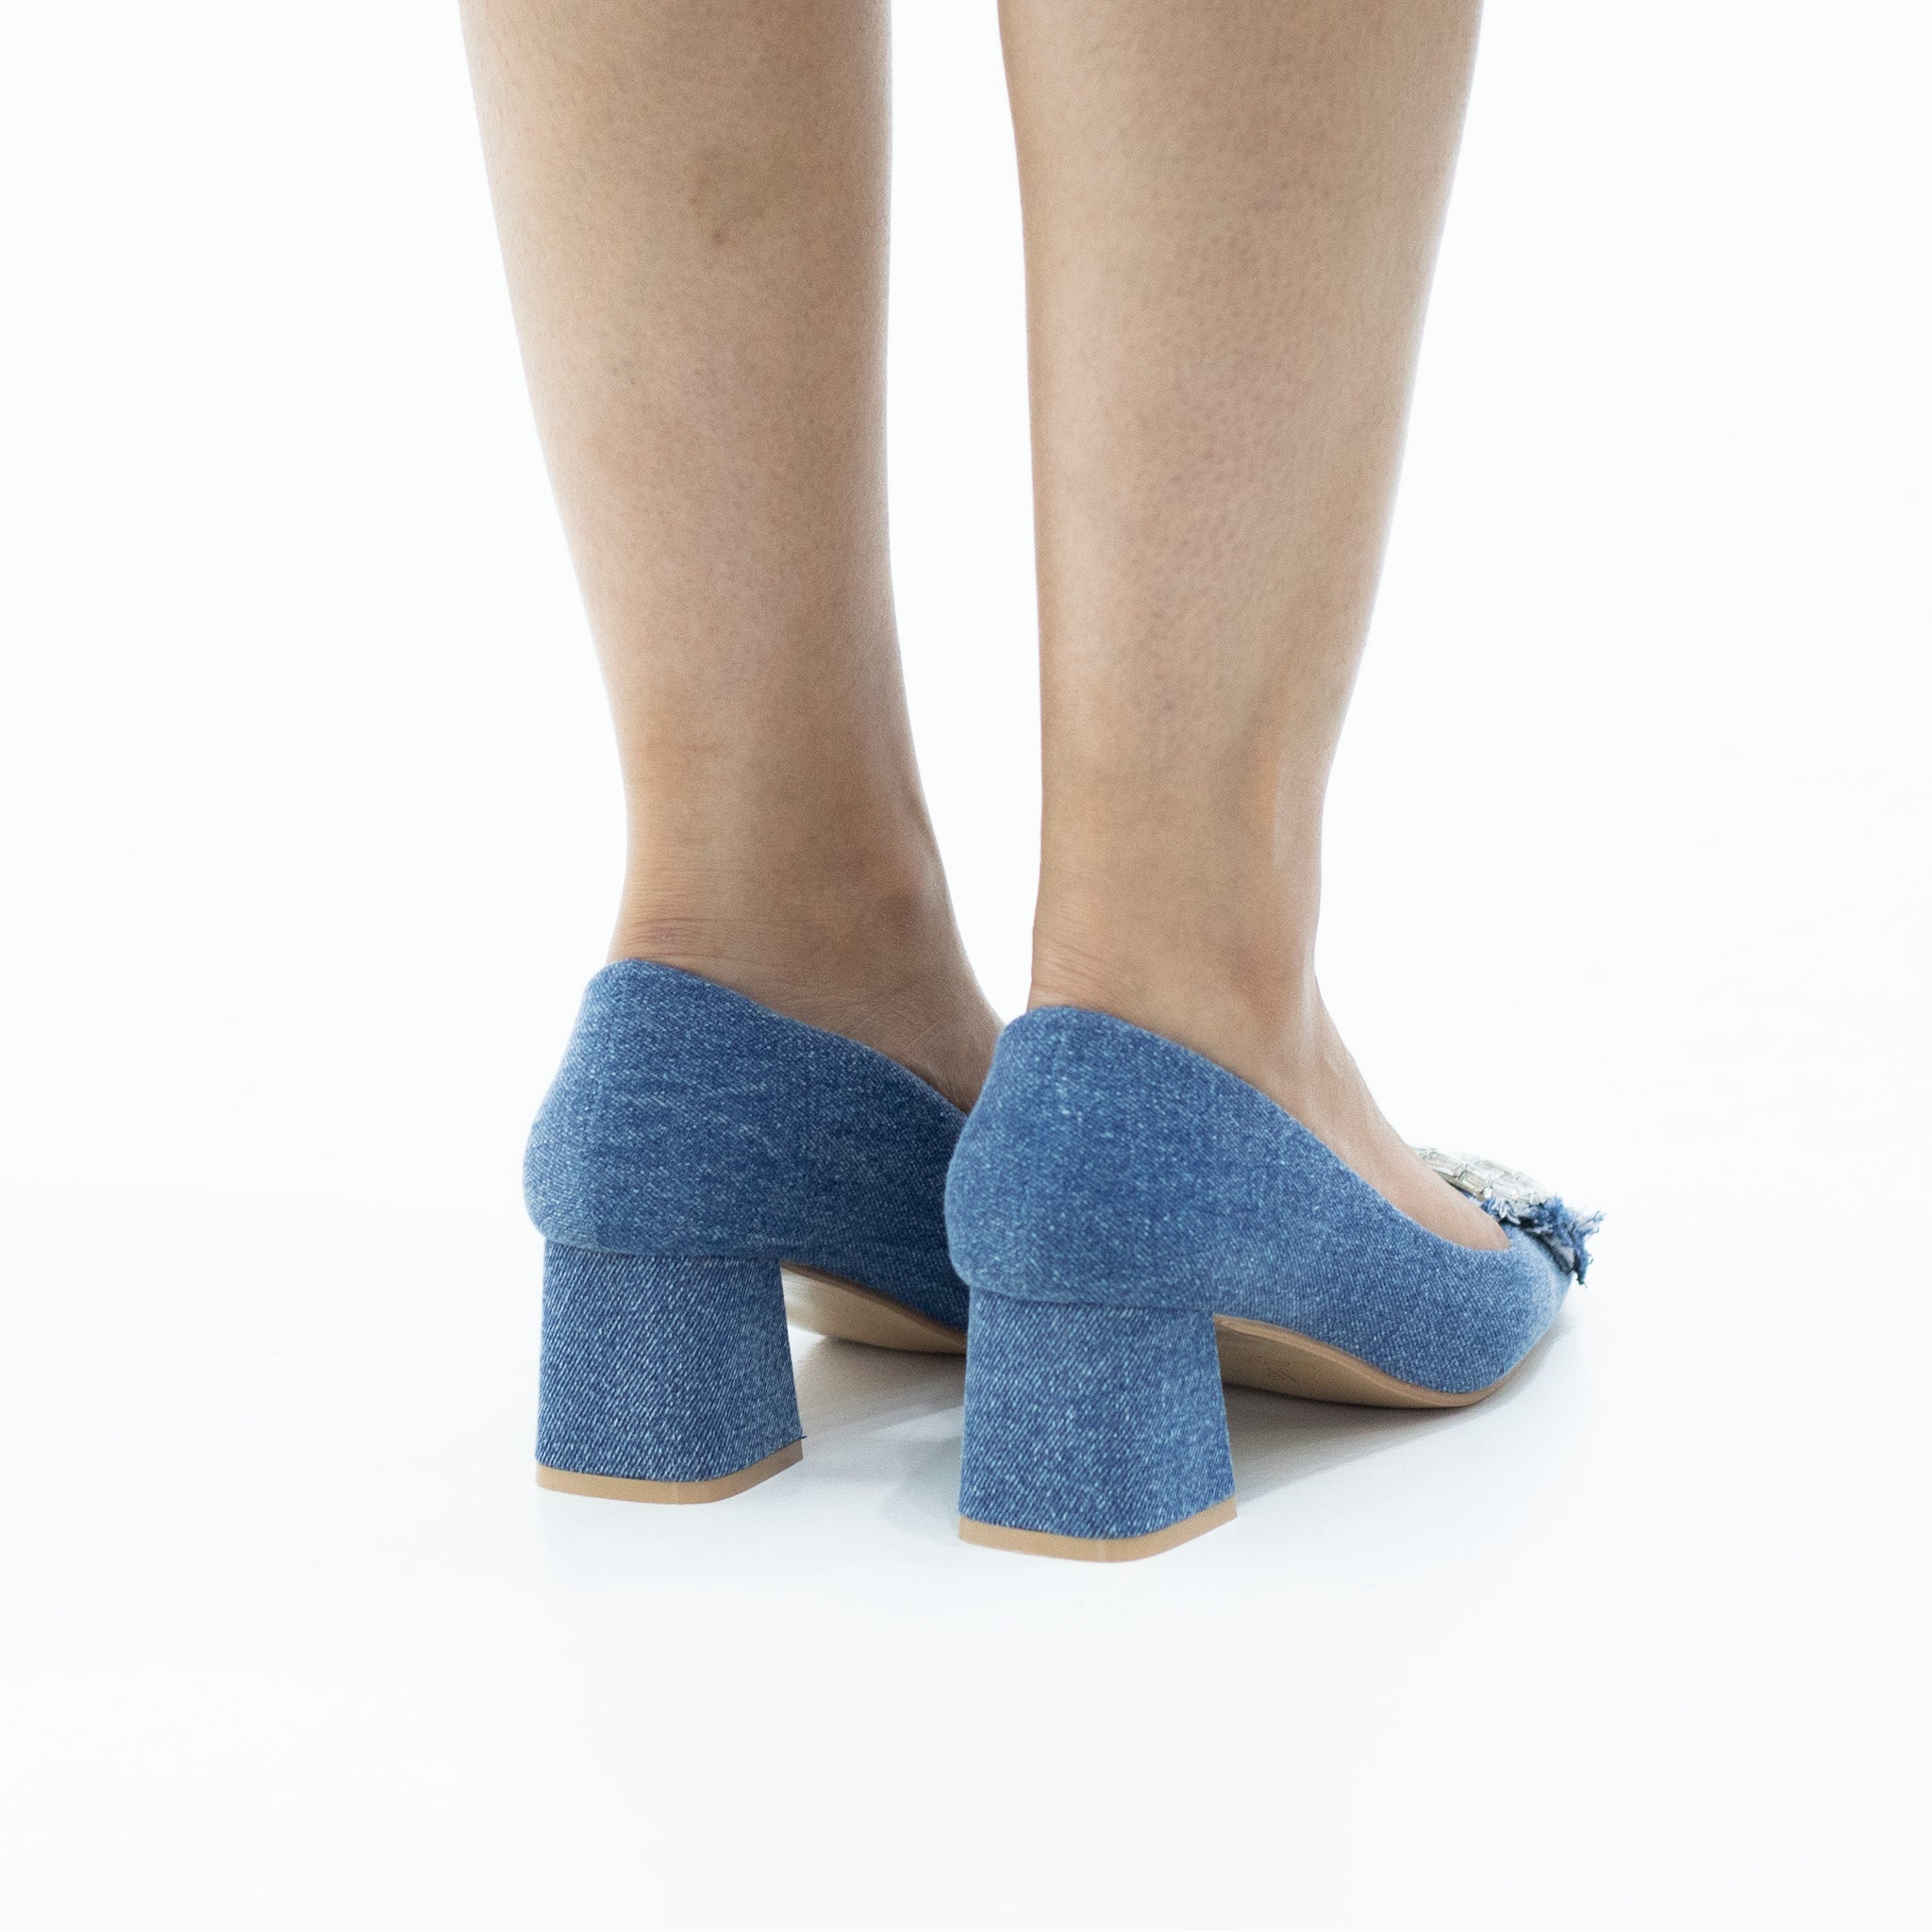 Denim jeans comfort 5.5cm heel court shoe with a regt trim wikola